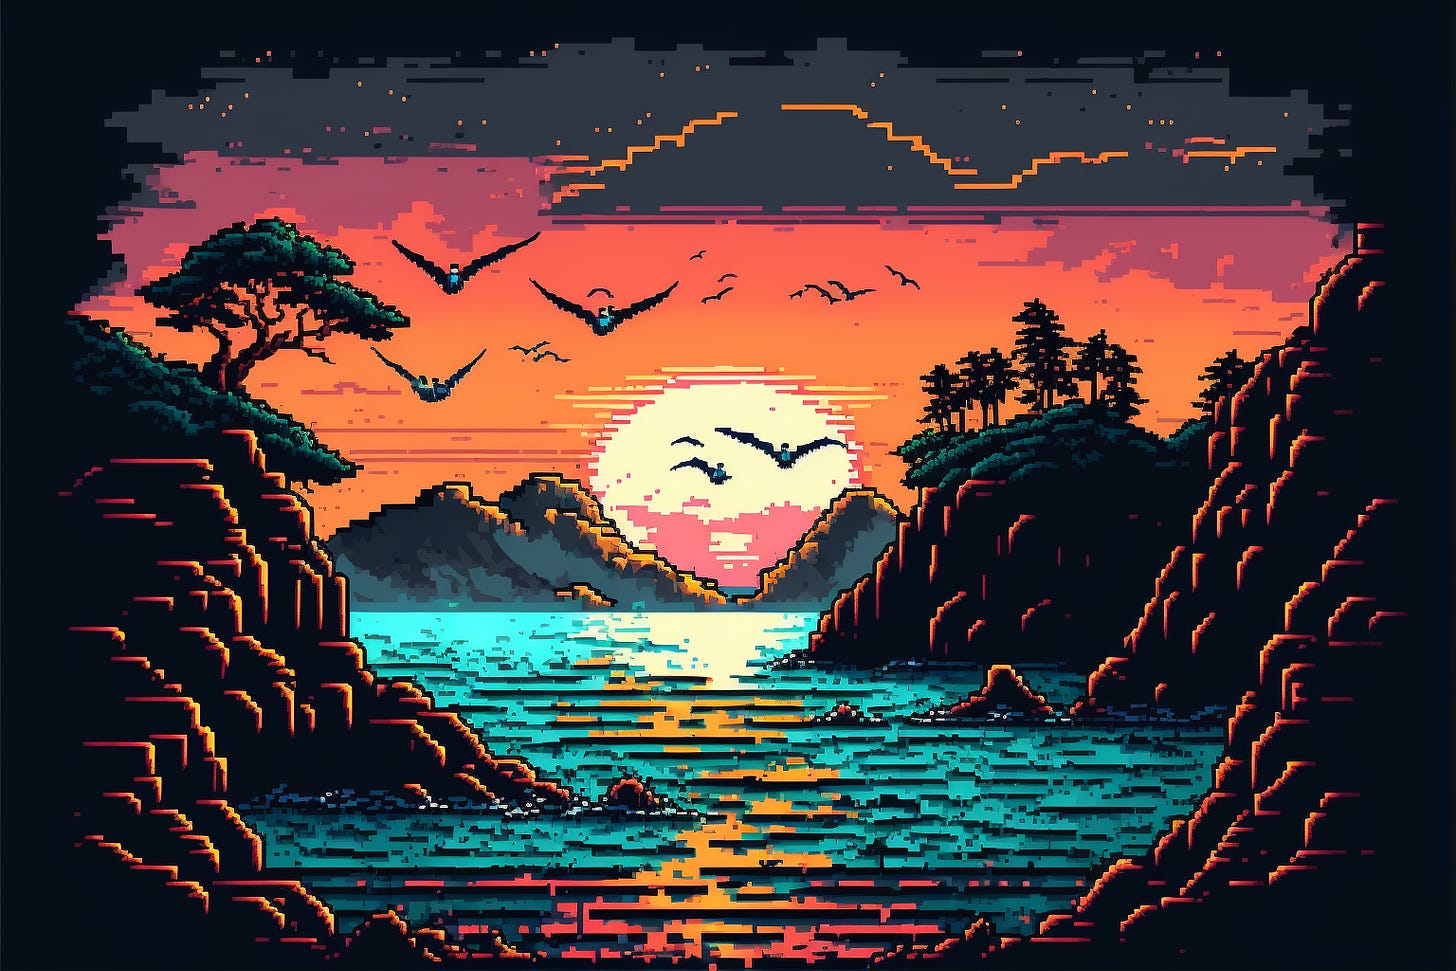 16-bit sunset over the ocean